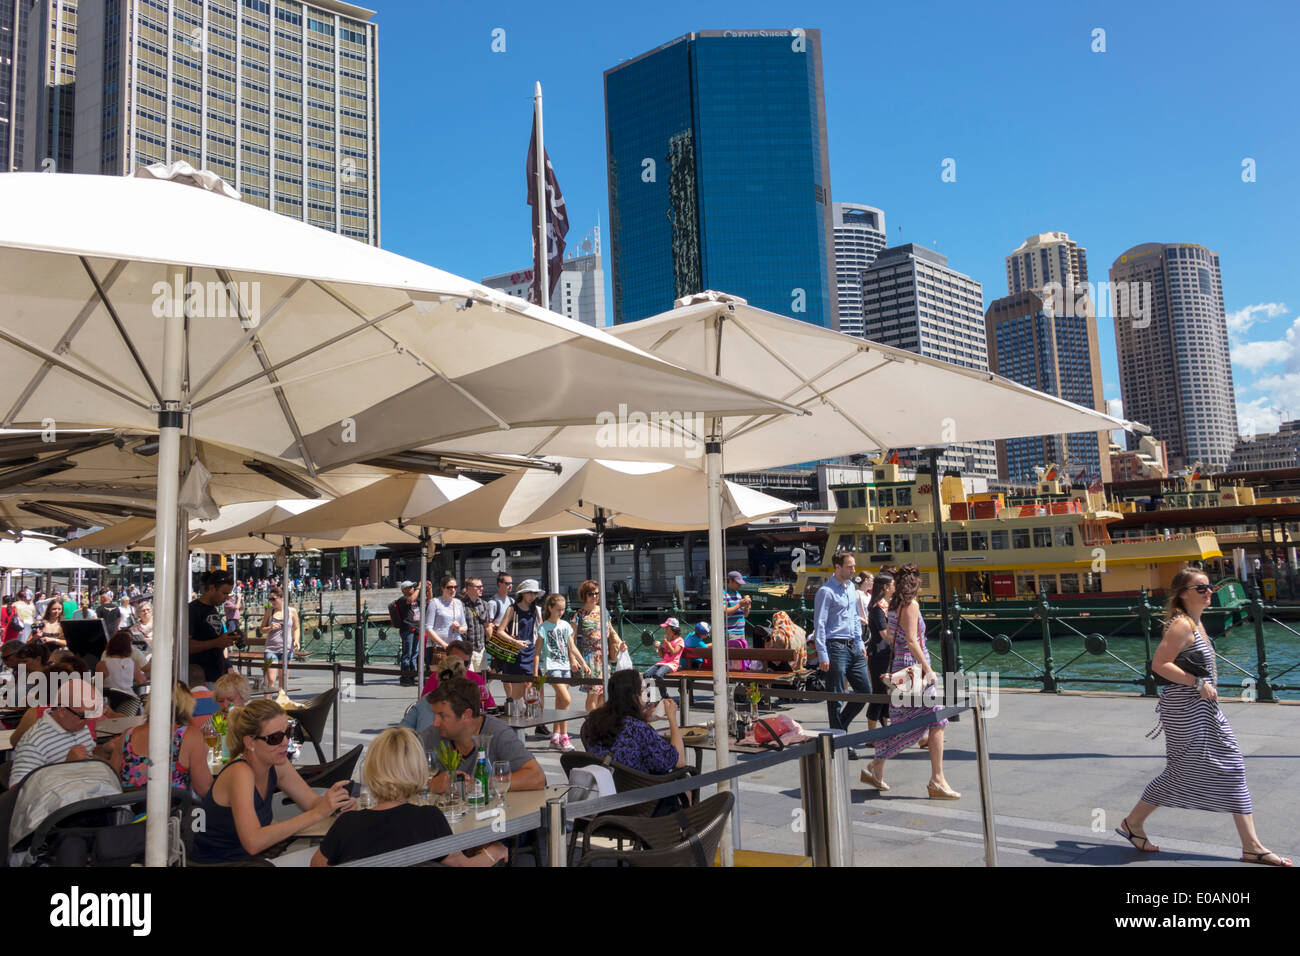 Sydney Australia,city skyline,skyscrapers,Sydney Harbour,harbor,East Circular Quay,promenade,restaurant restaurants food dining cafe cafes,al fresco s Stock Photo